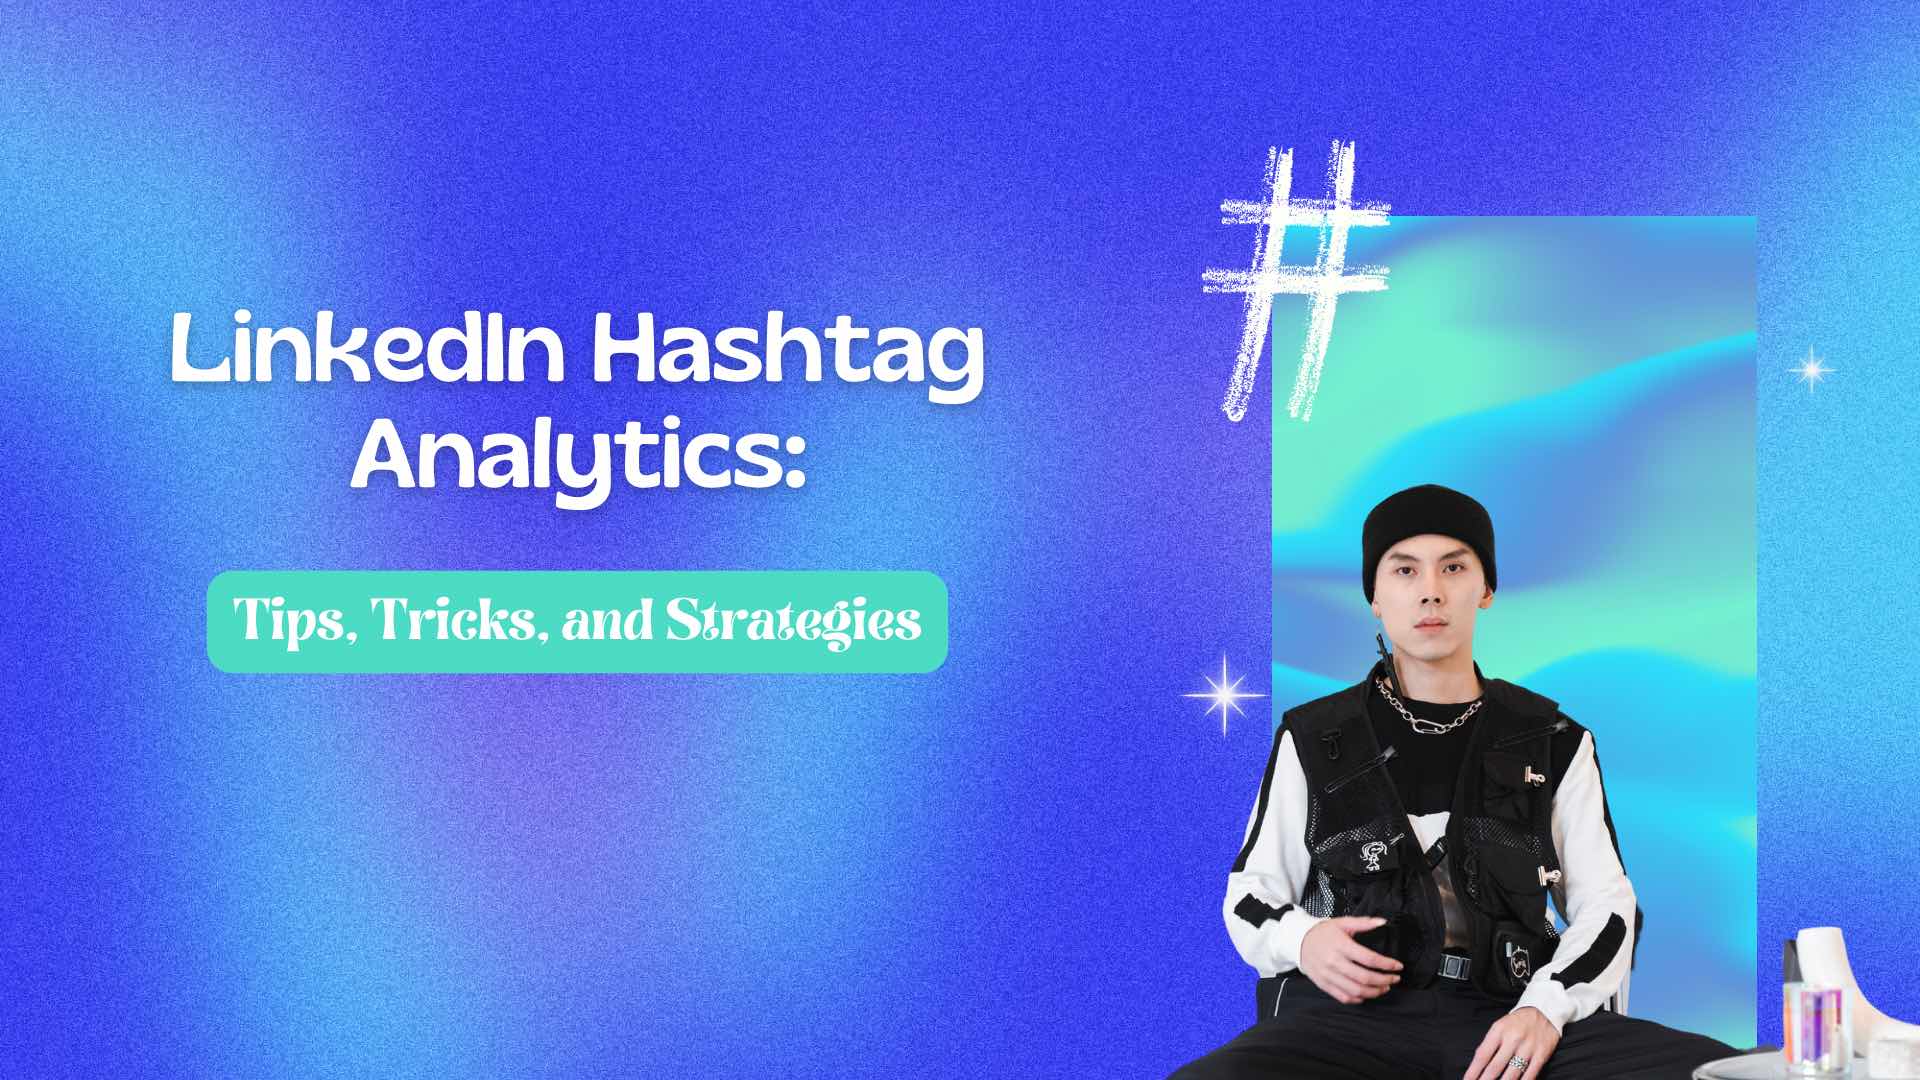 LinkedIn Hashtag Analytics: Tips, Tricks, and Strategies